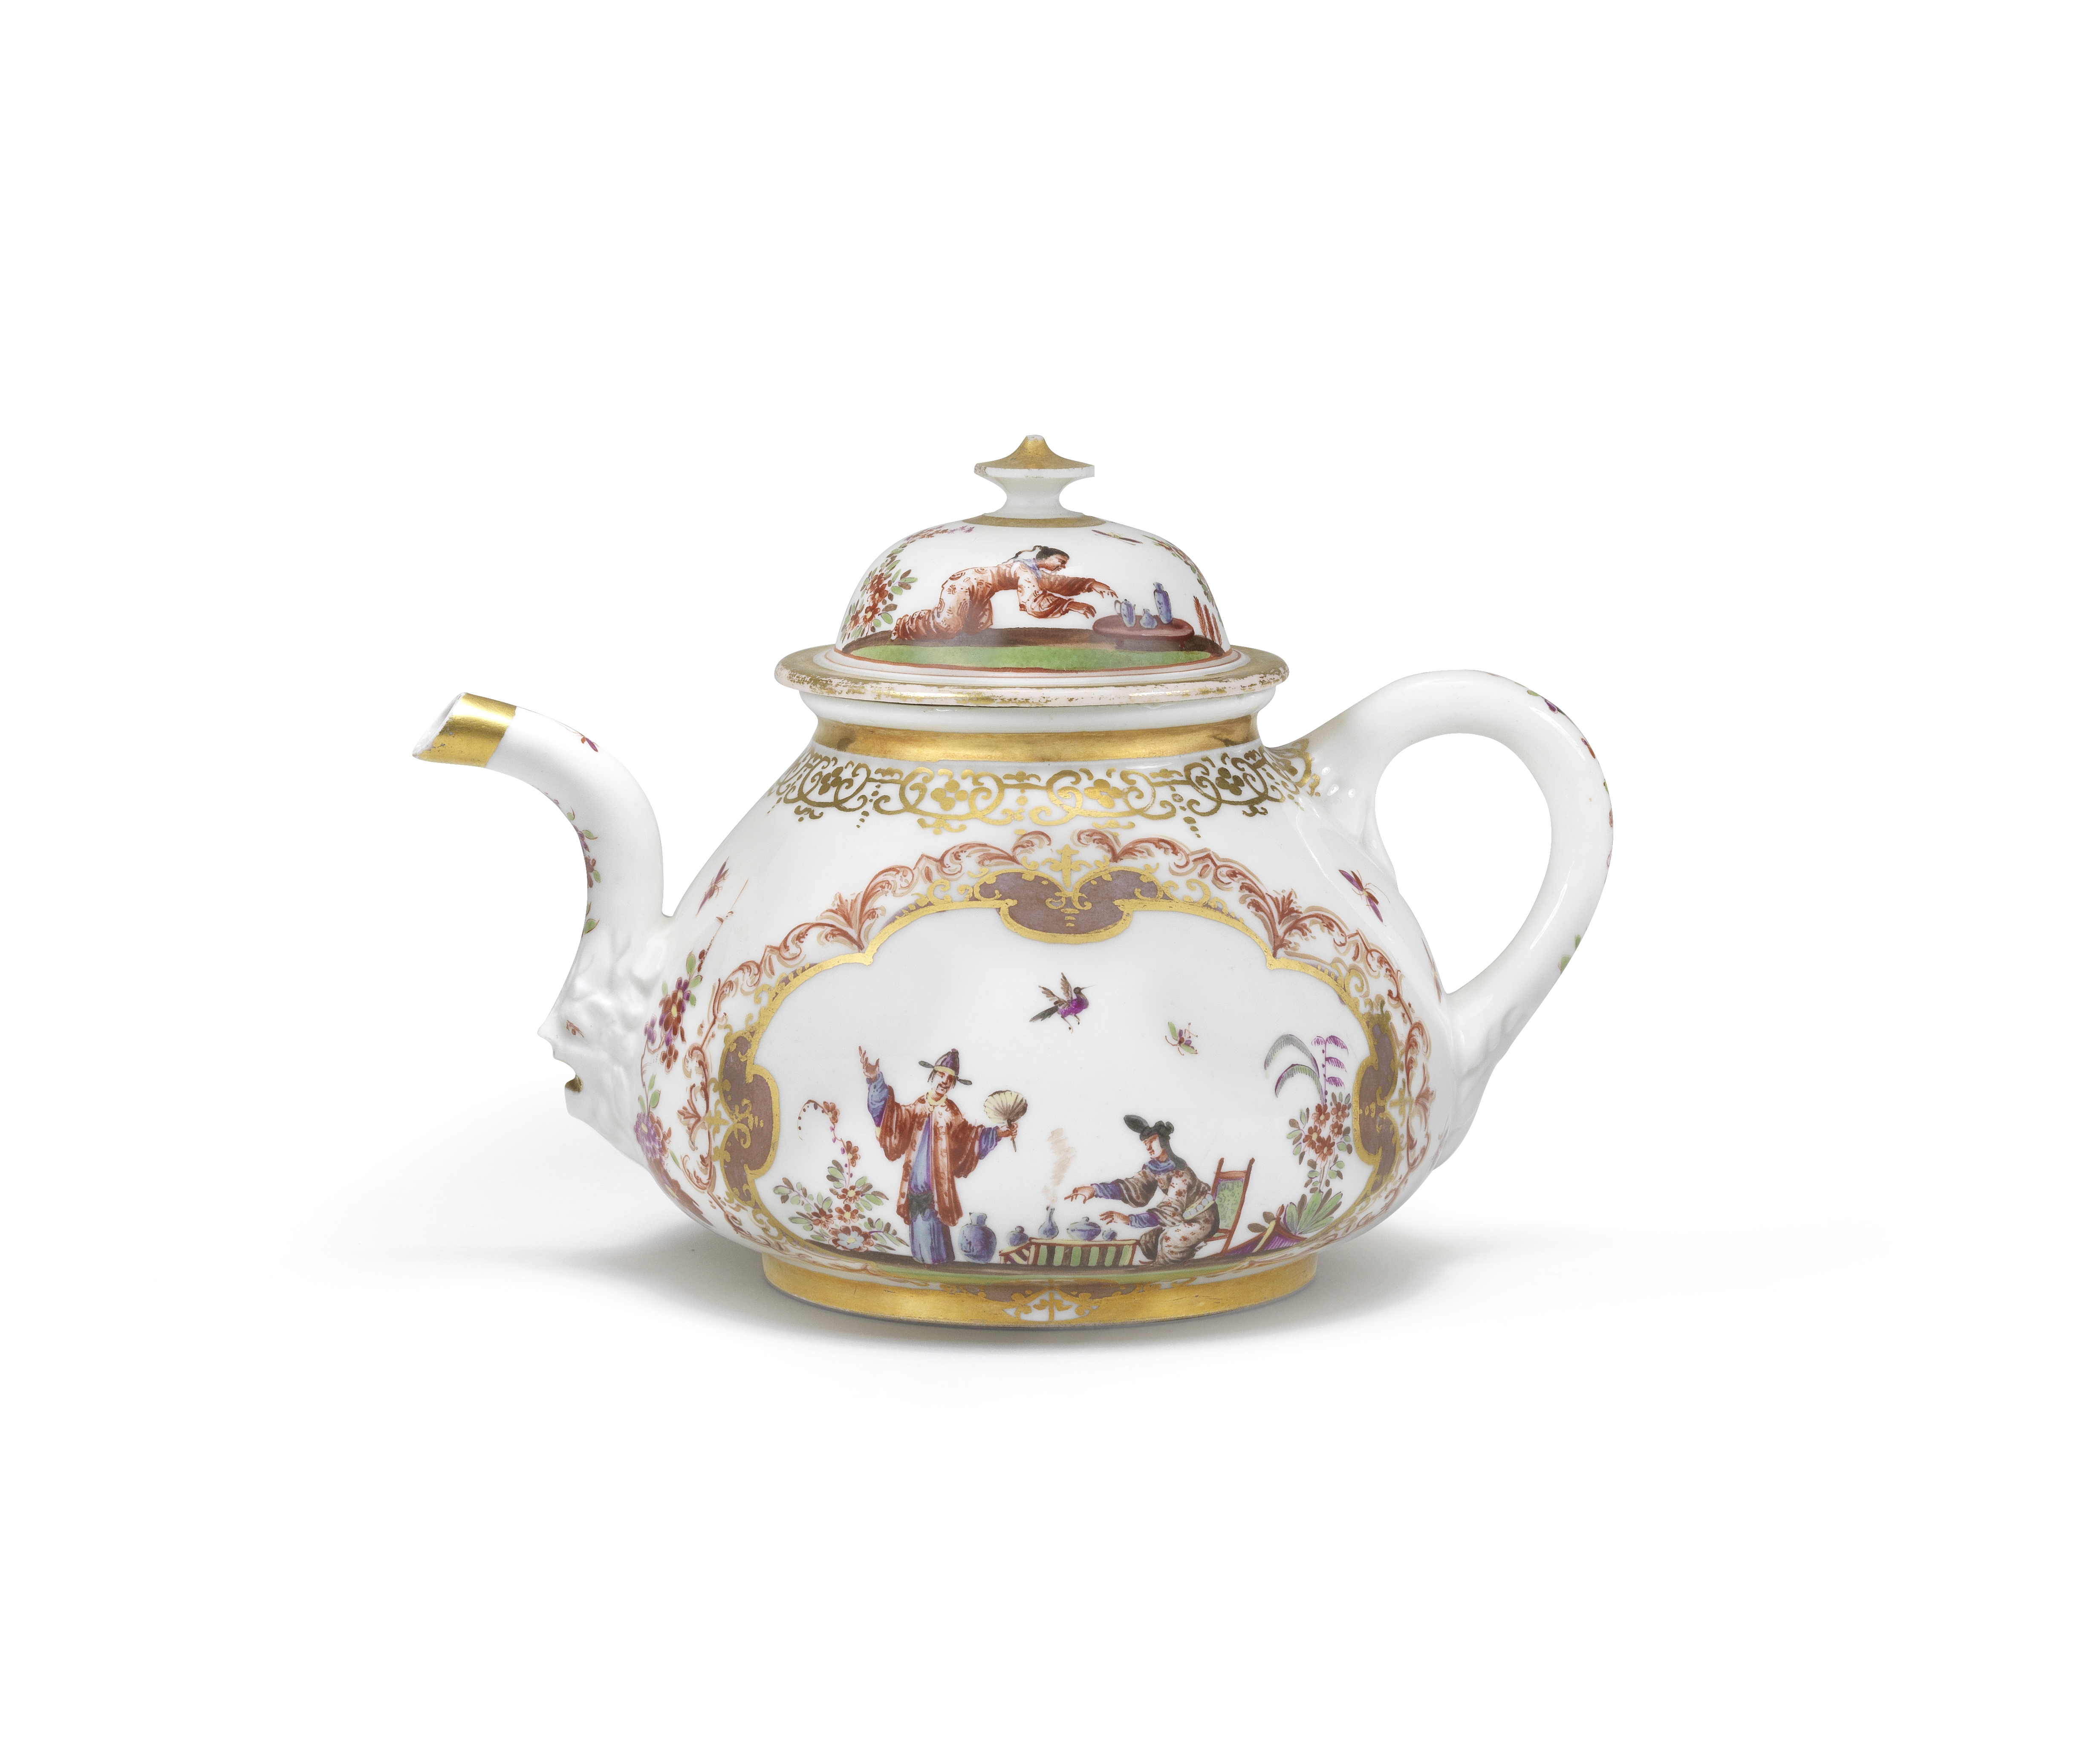 A Meissen teapot and cover, circa 1723-24